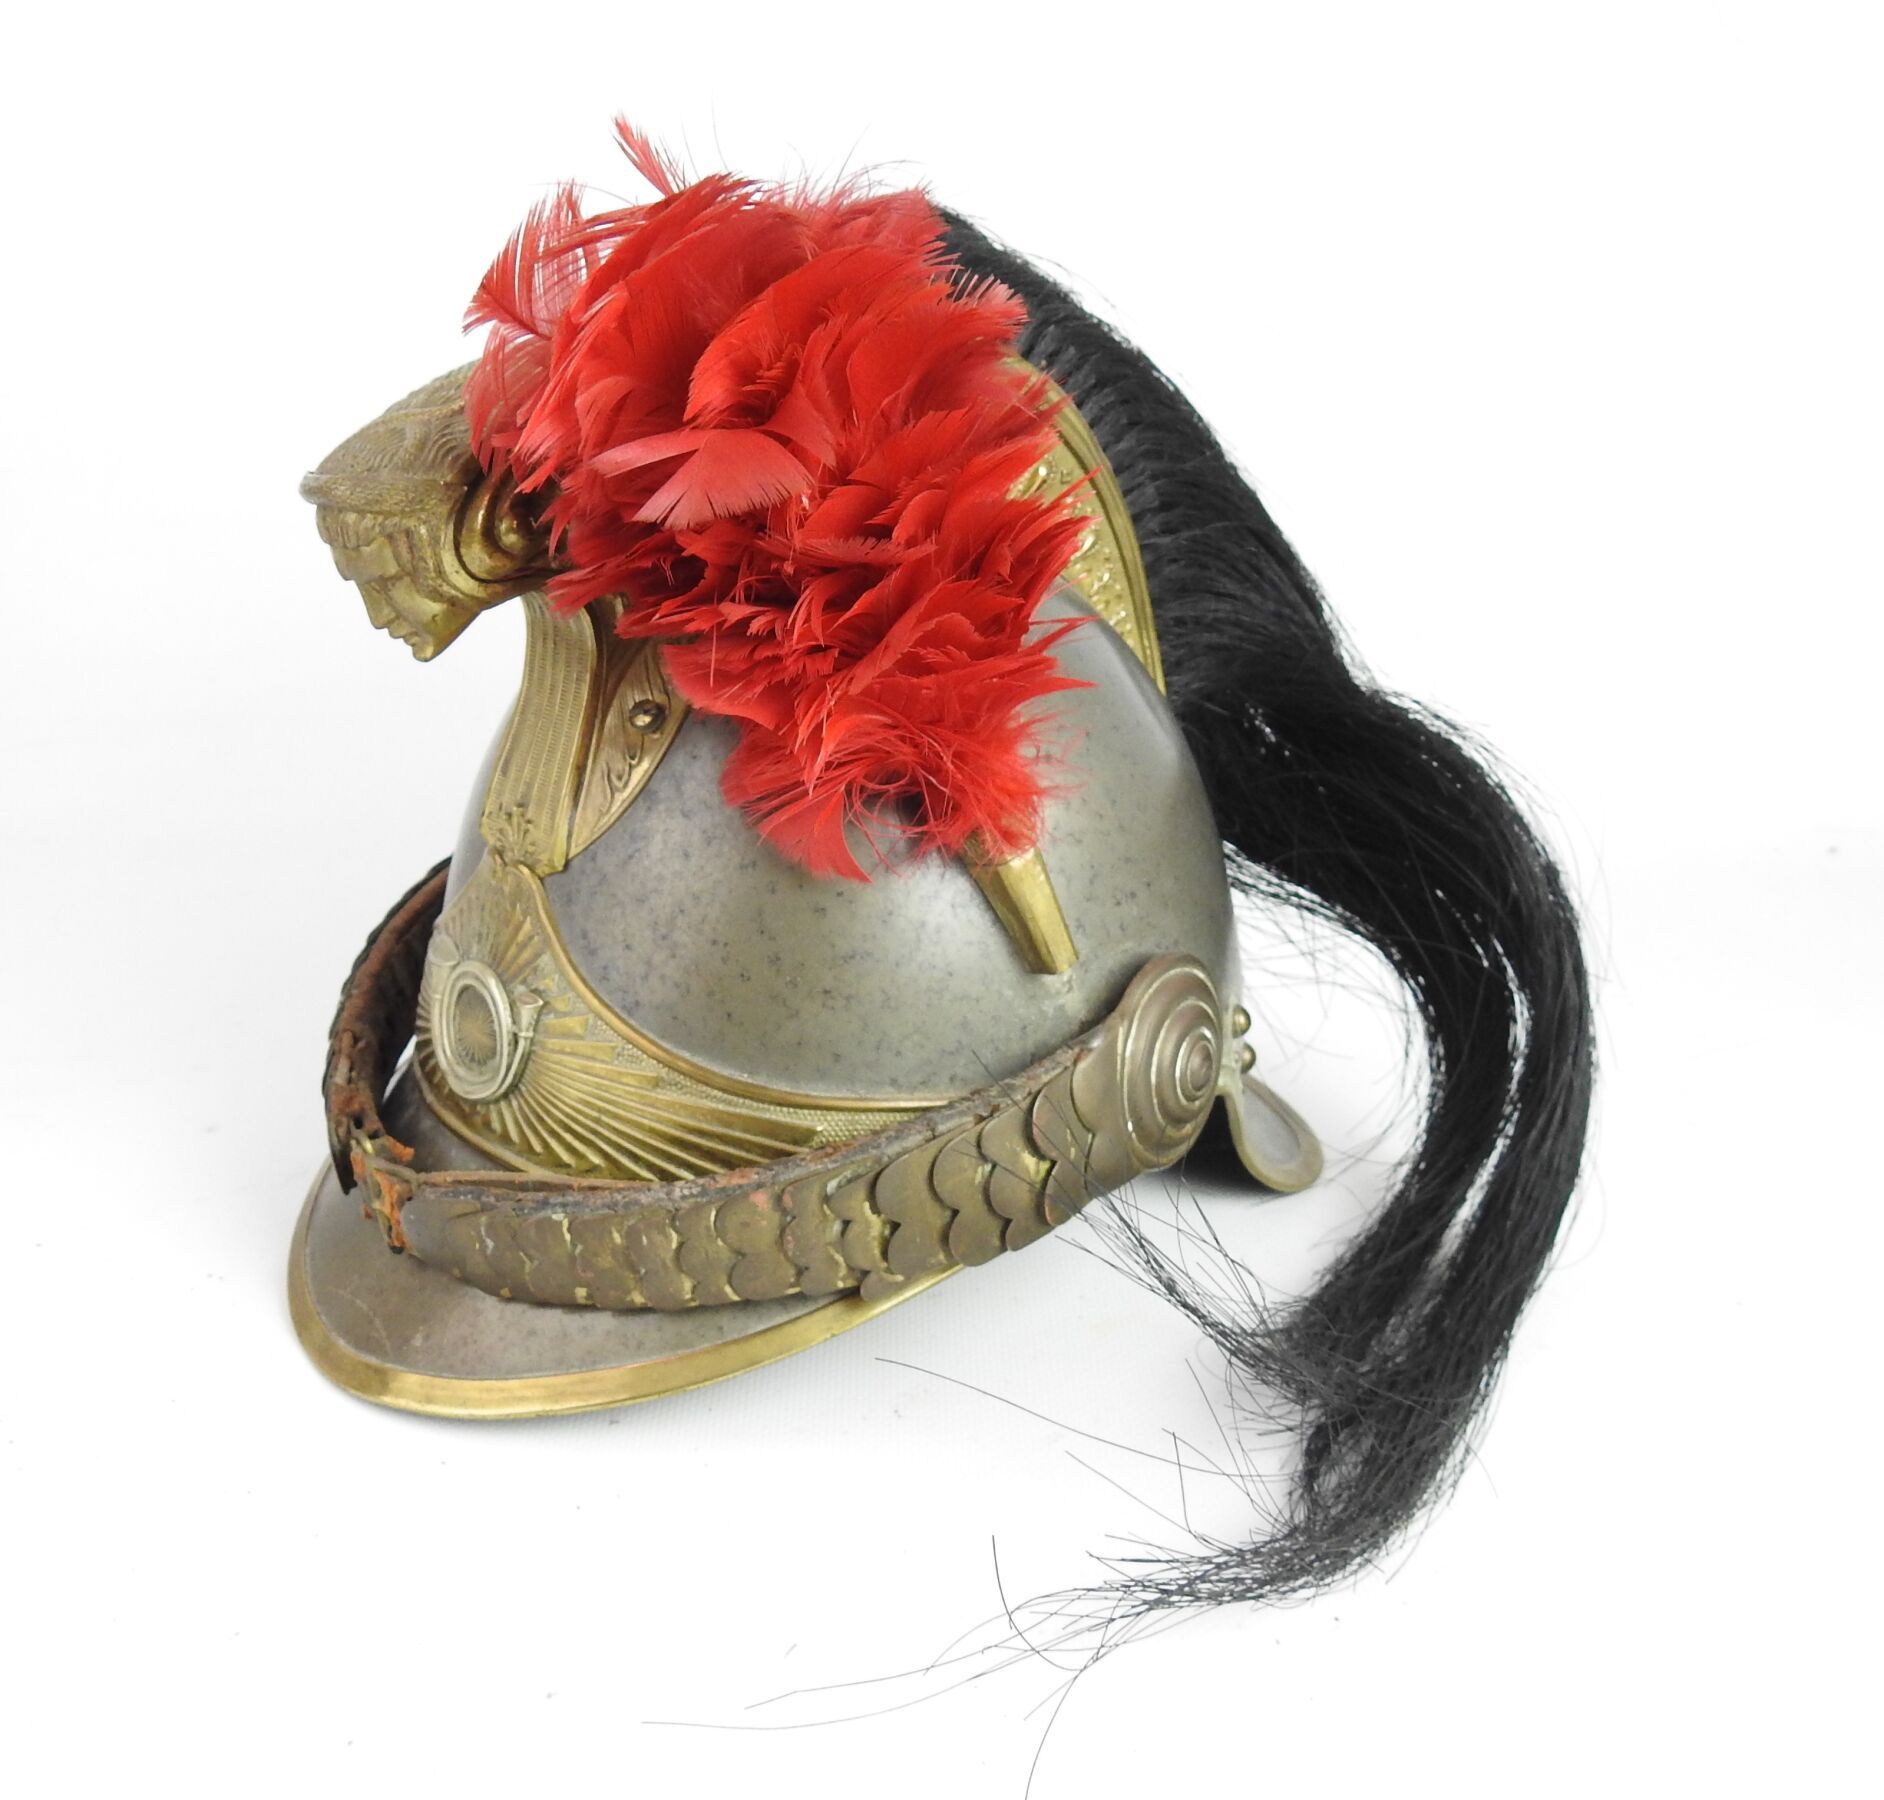 Null 法国。1913年的马匹猎人头盔，带有钢制炸弹，铜制饰物和颈椎，铜制带子上装饰有镀银的狩猎角，内部有狼牙的帽子，带着梅花，炸弹打孔尺寸为 "55"，制造&hellip;